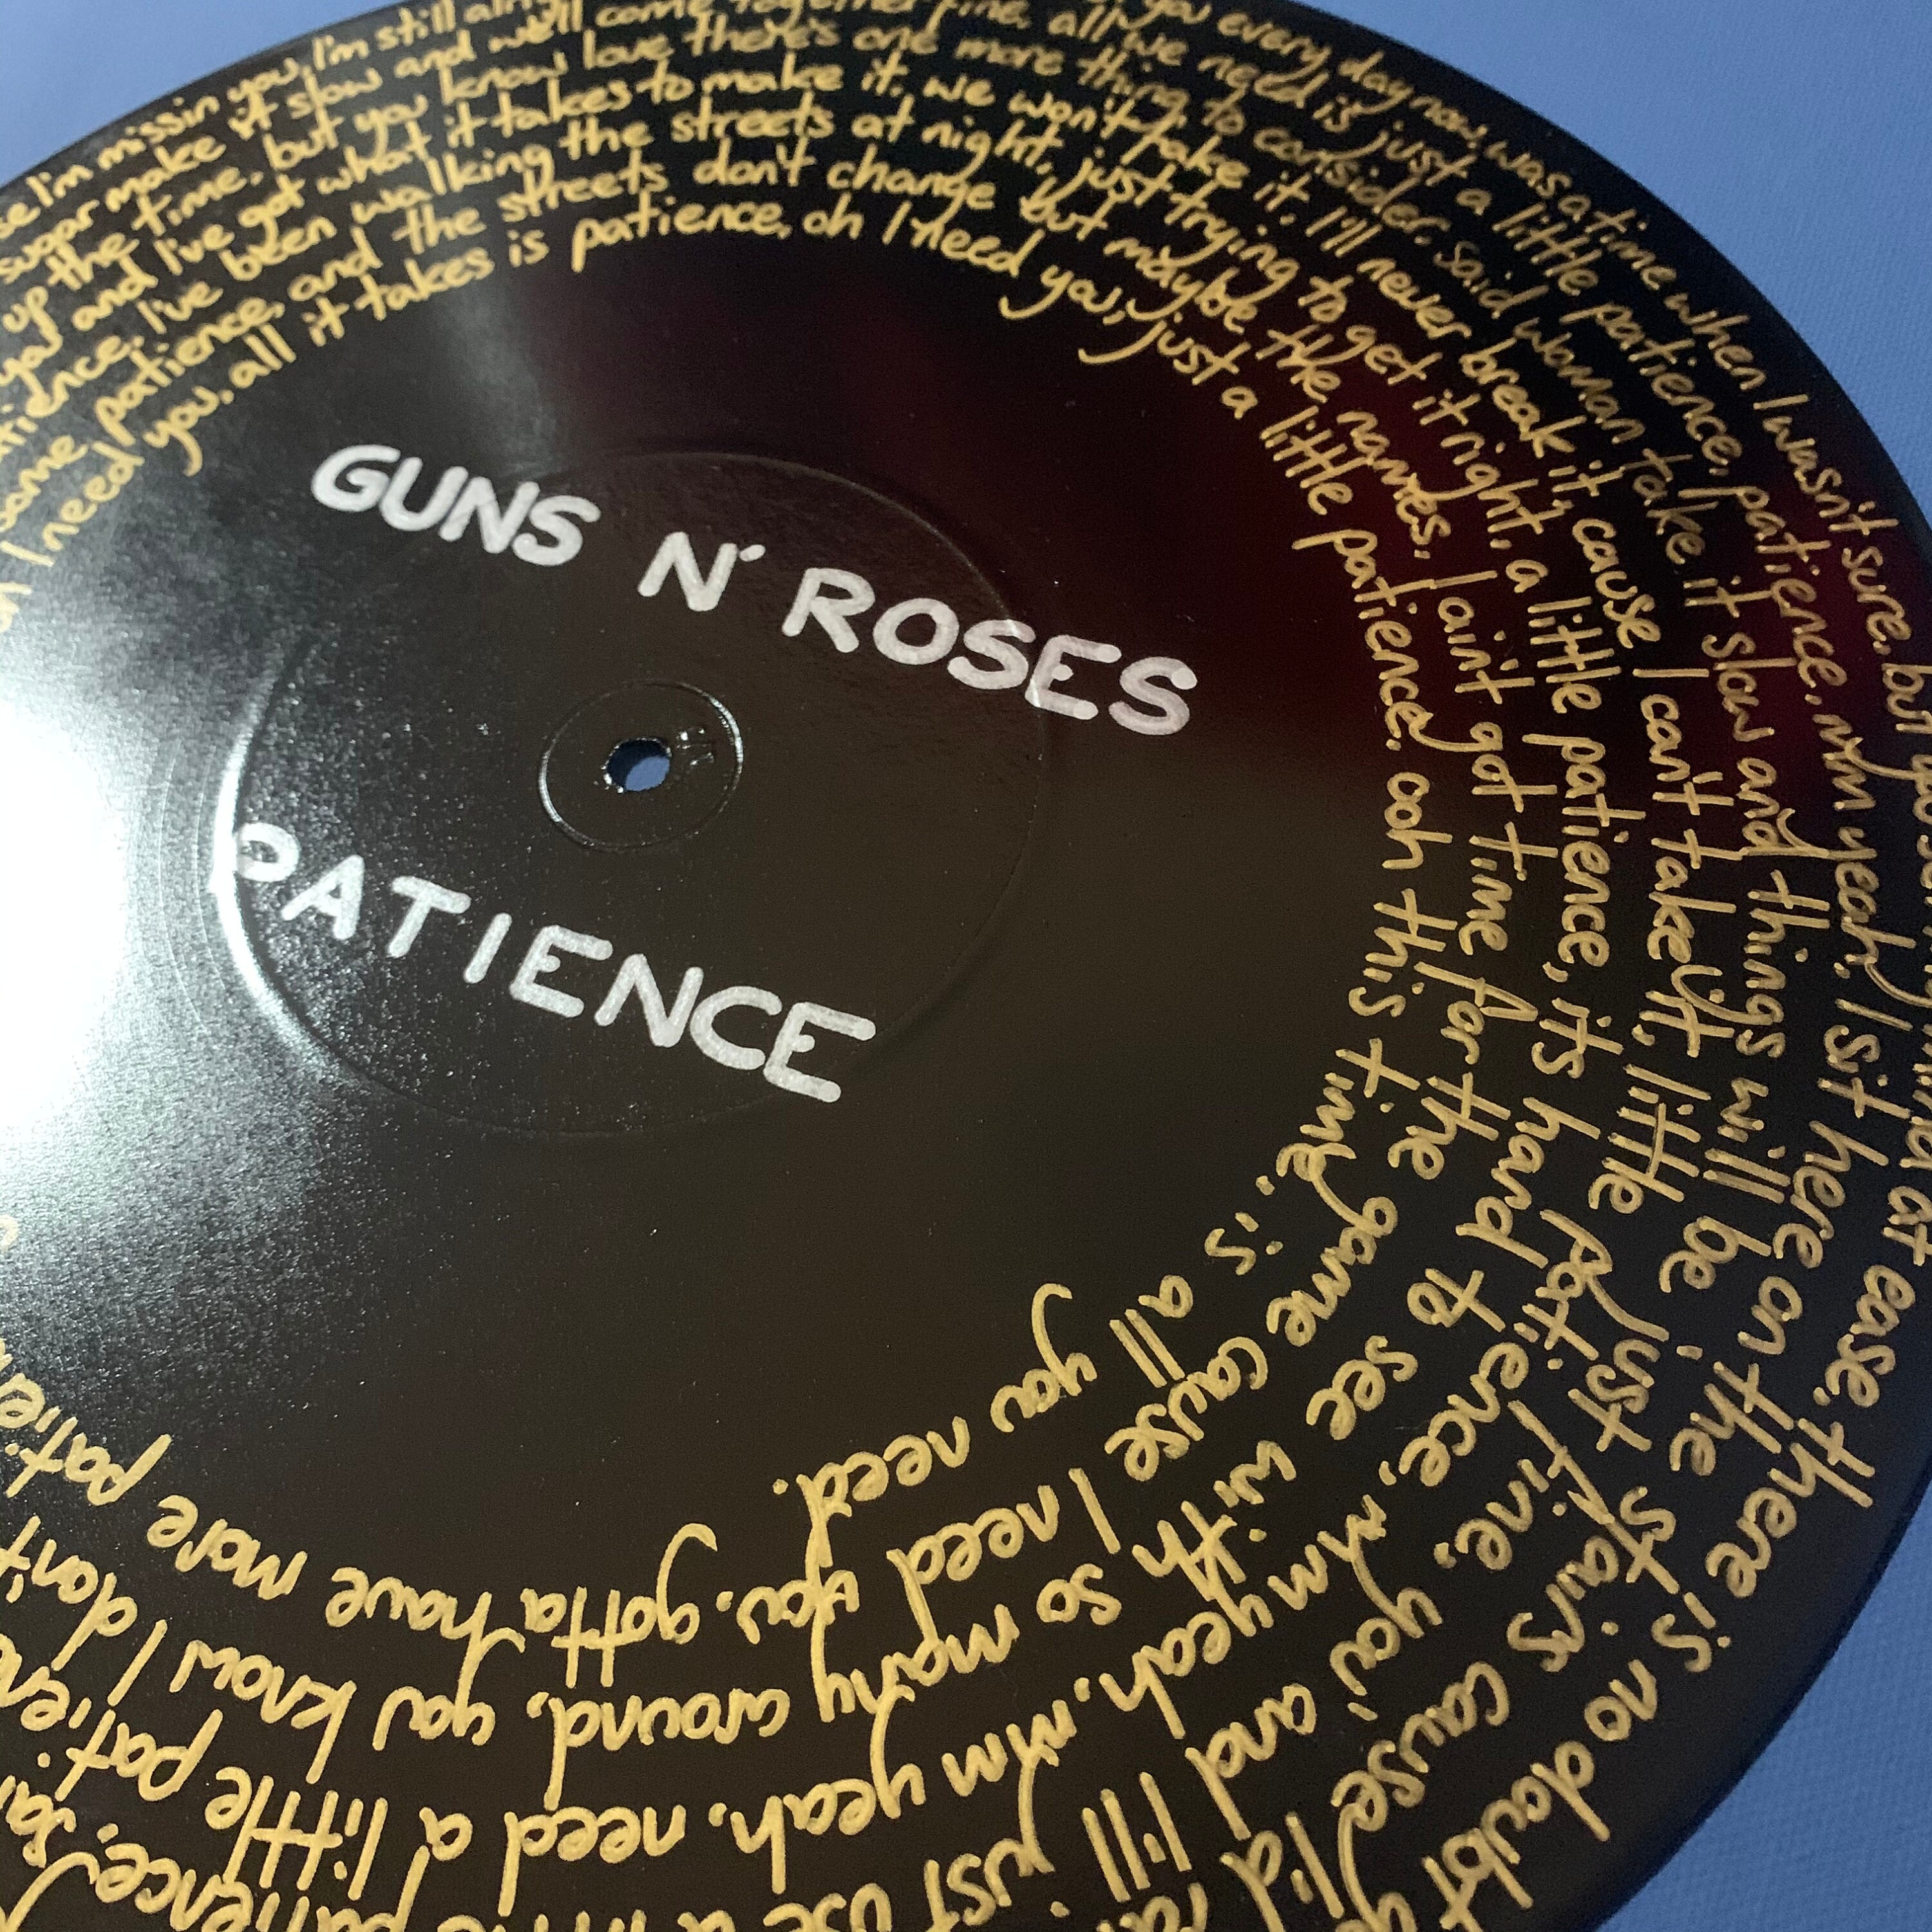 Guns N' Roses - Patience: listen with lyrics